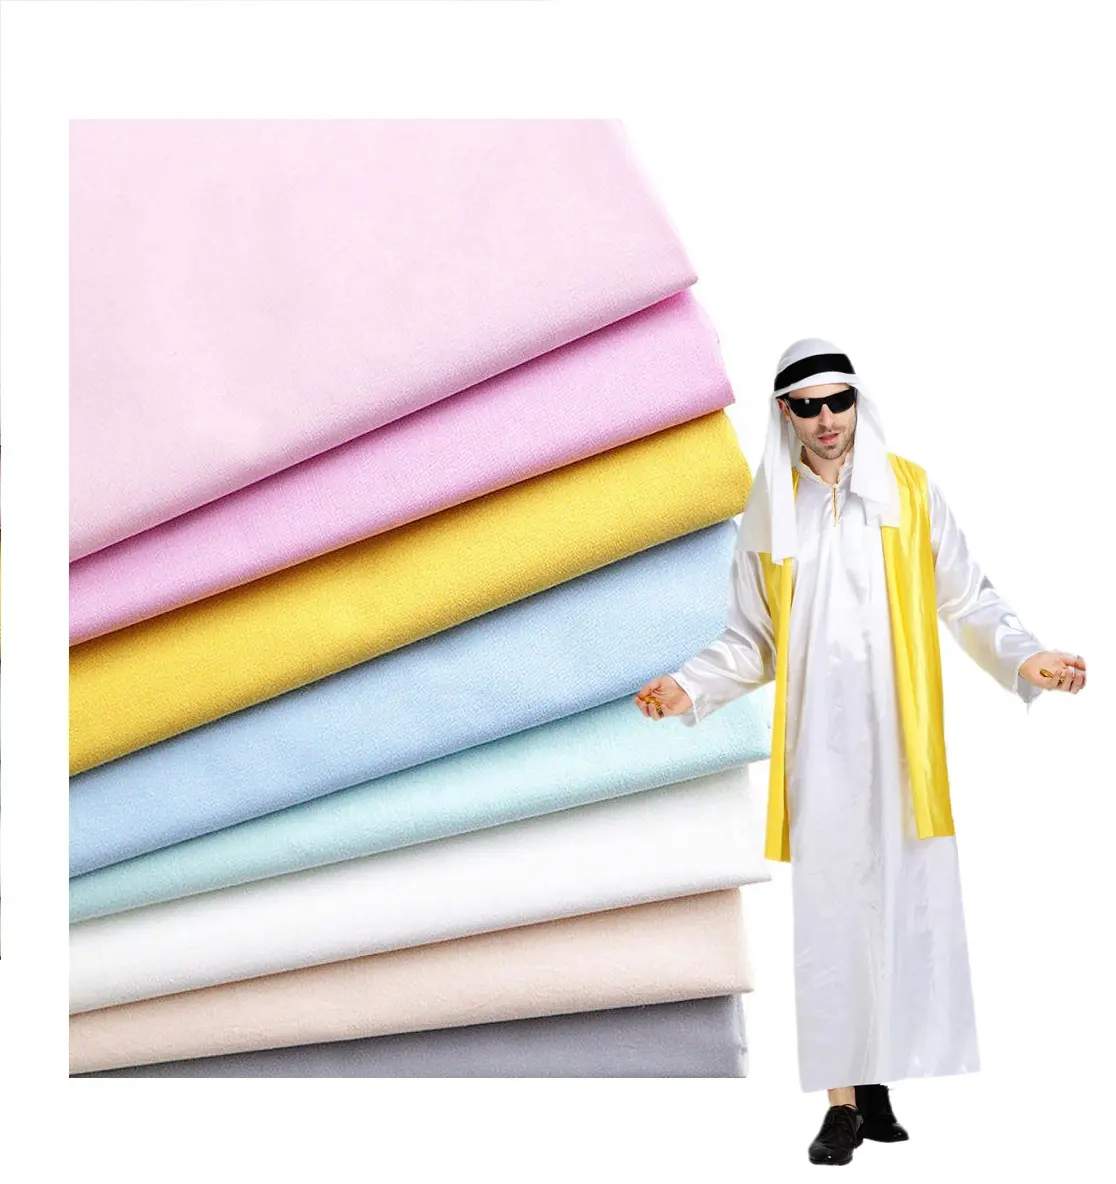 80/20 60/40 100GSM Poliéster Algodón China barato 100% Hilado Poliéster árabe thobe tela para camisas y túnicas